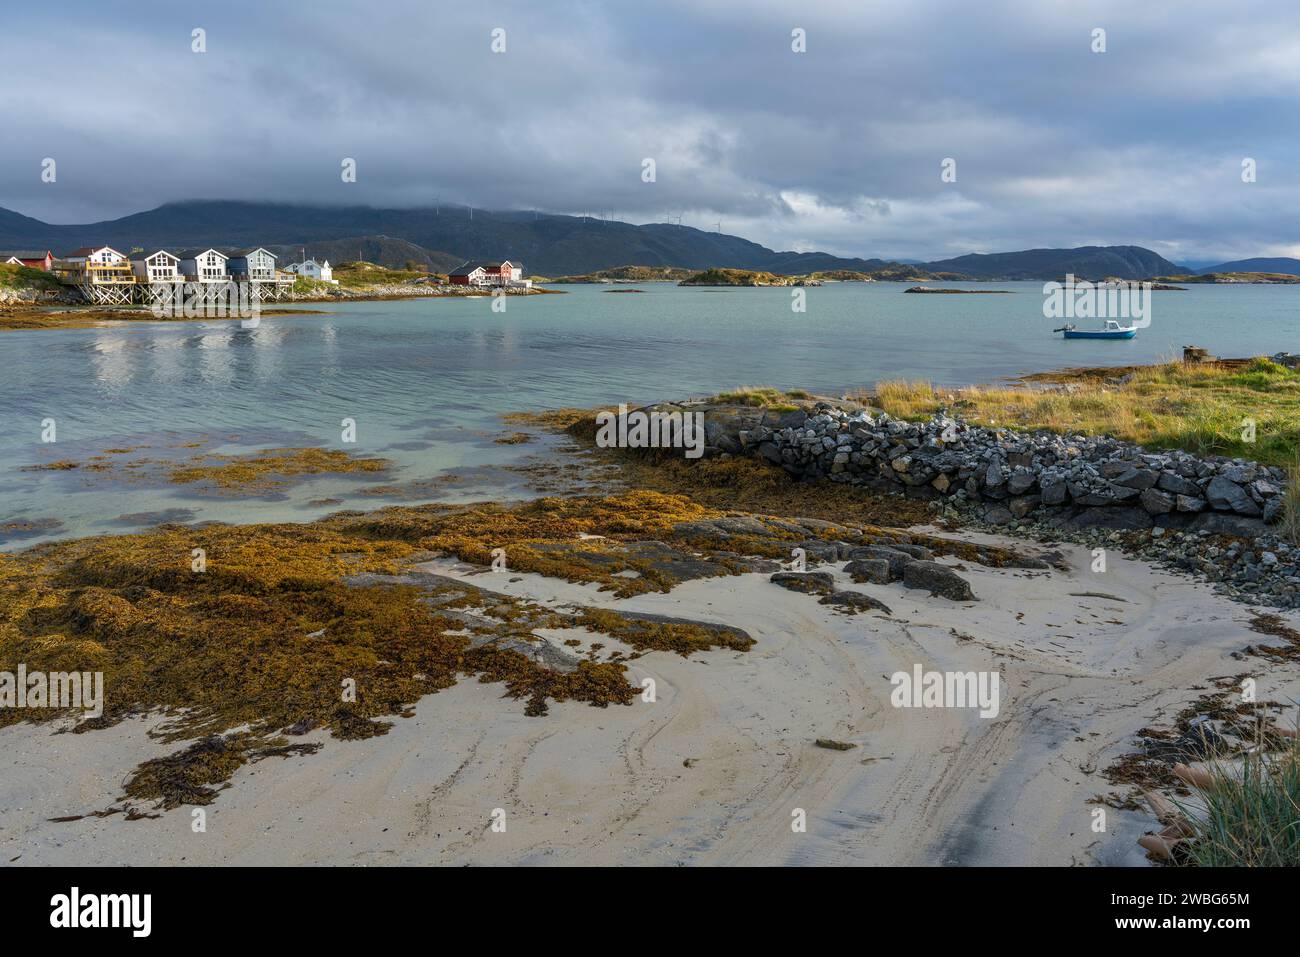 Panorama, Haus am See, Ferienhaus am Meer, Herbststimmung in Norwegen, Ruhe am Strand des Atlantik, Meerblick und Herbstfarben Banque D'Images